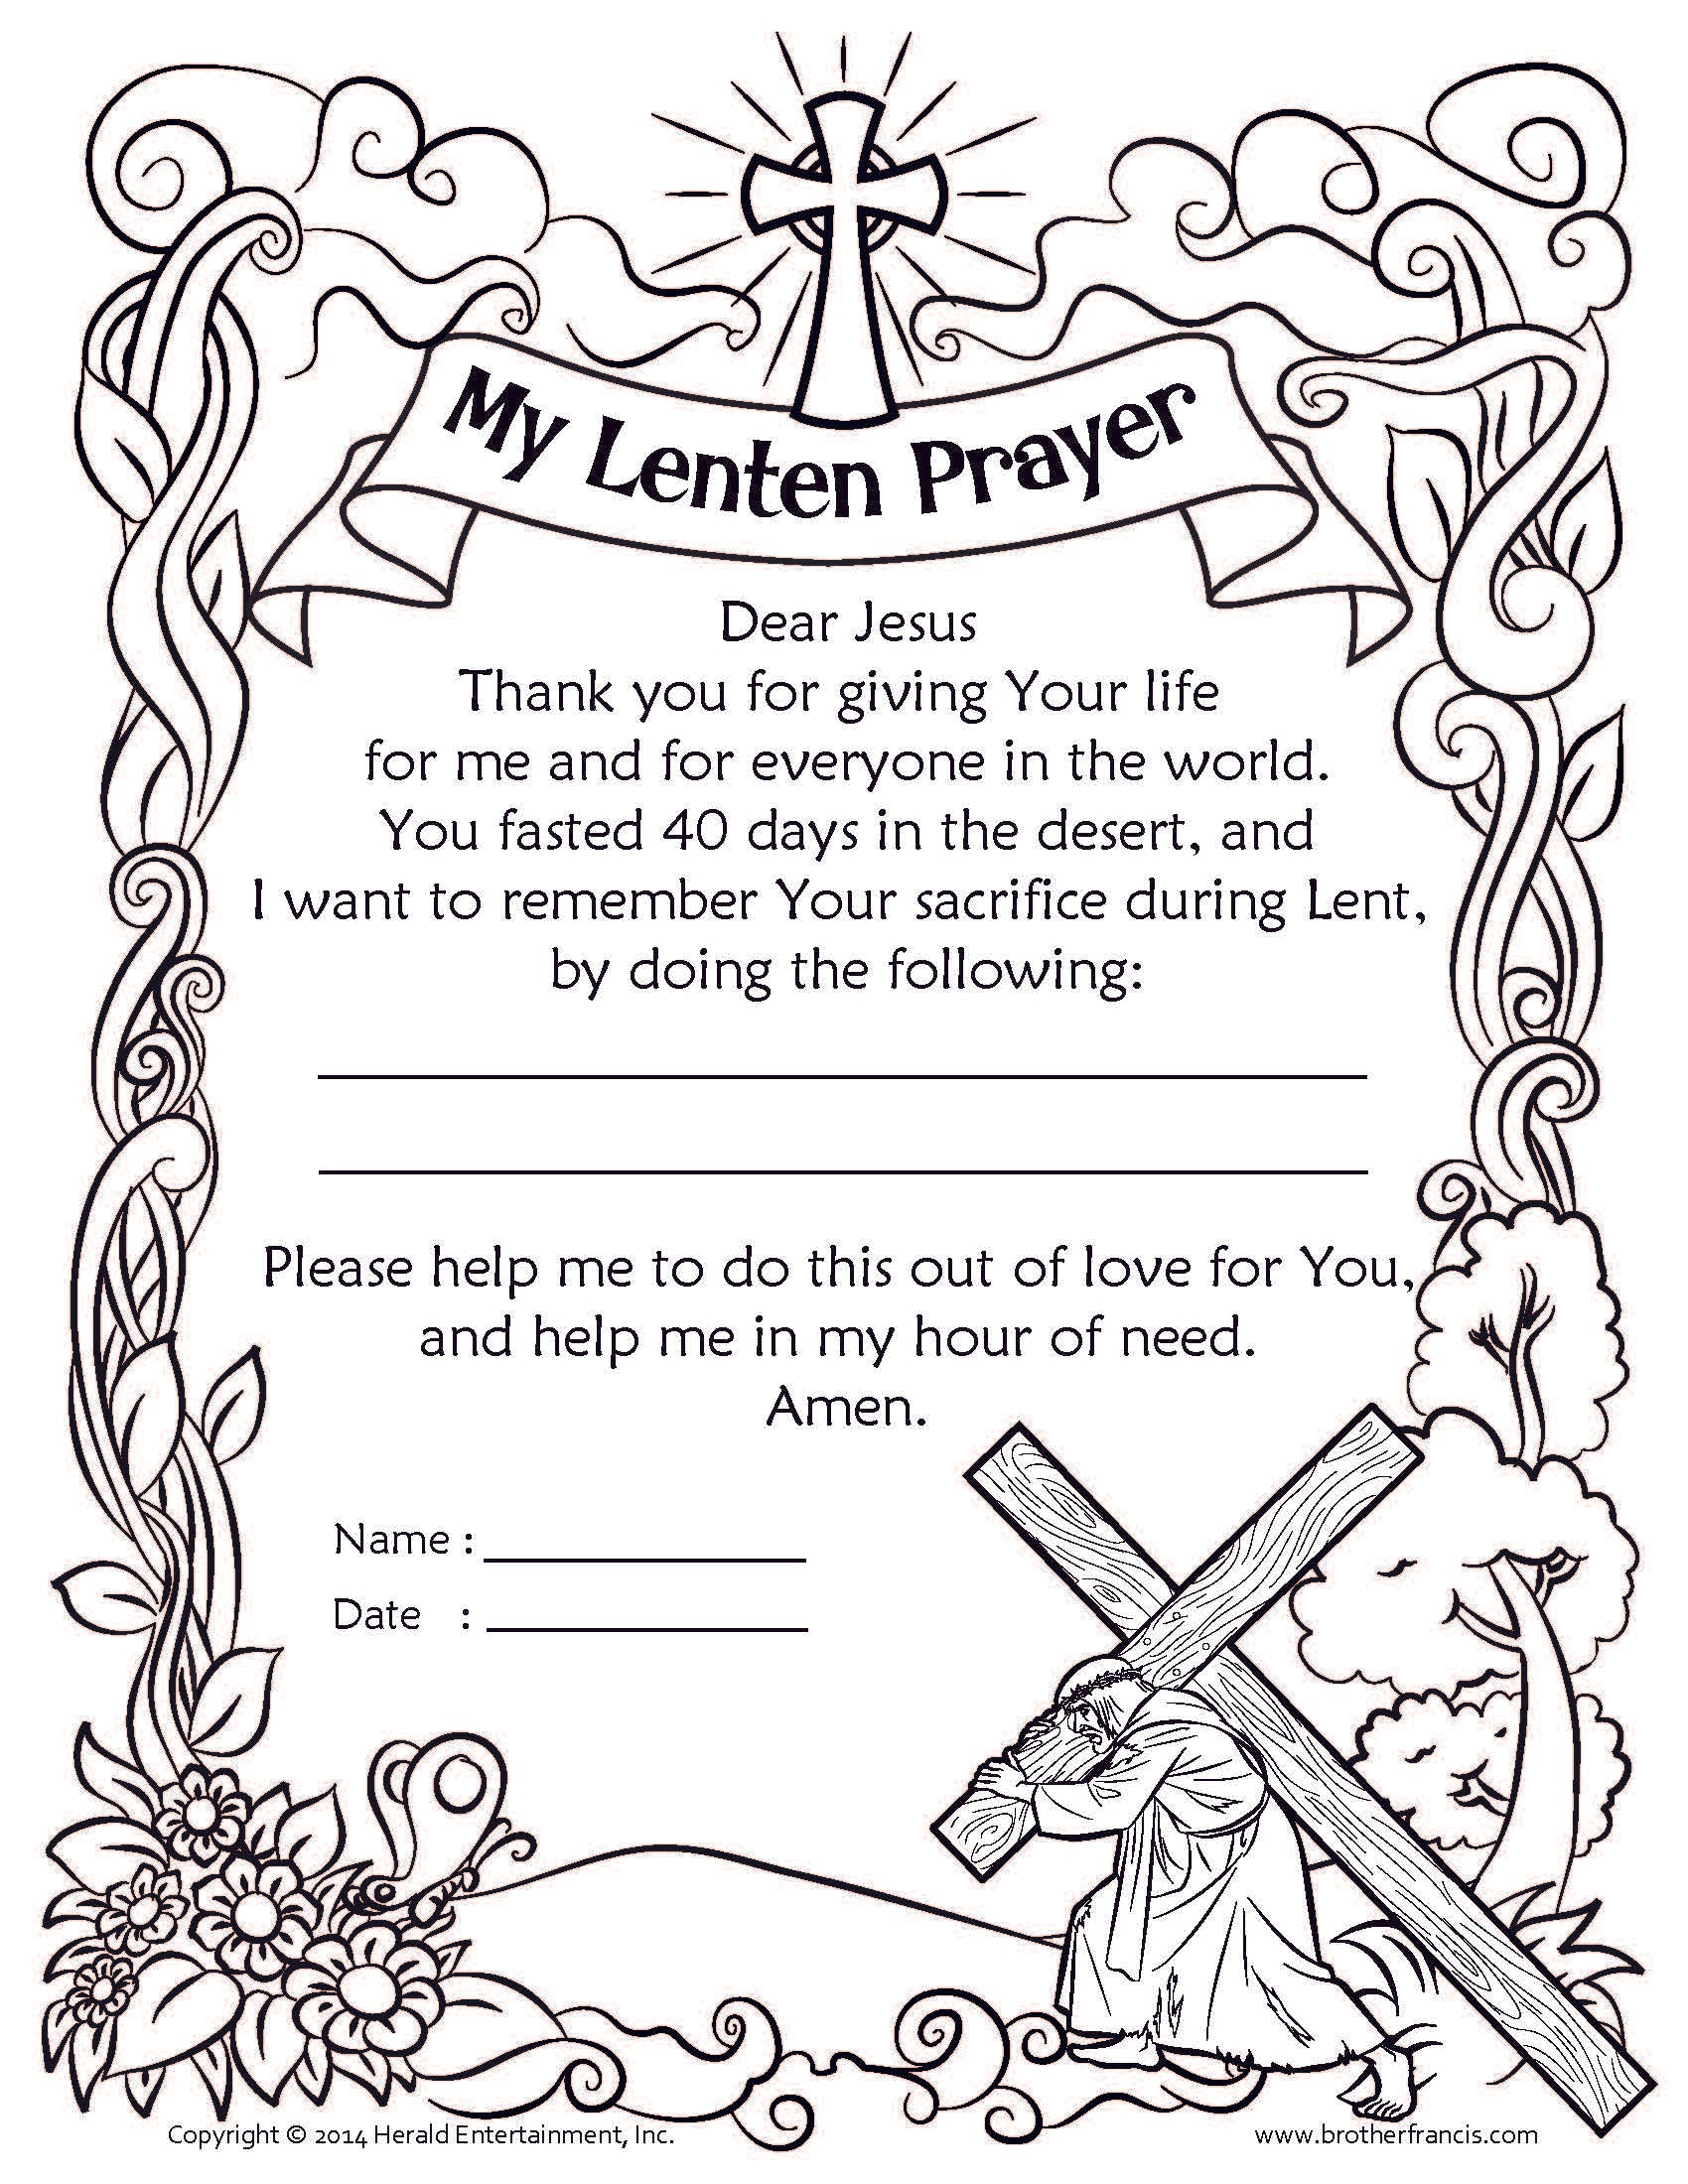 download-and-print-my-lenten-prayer